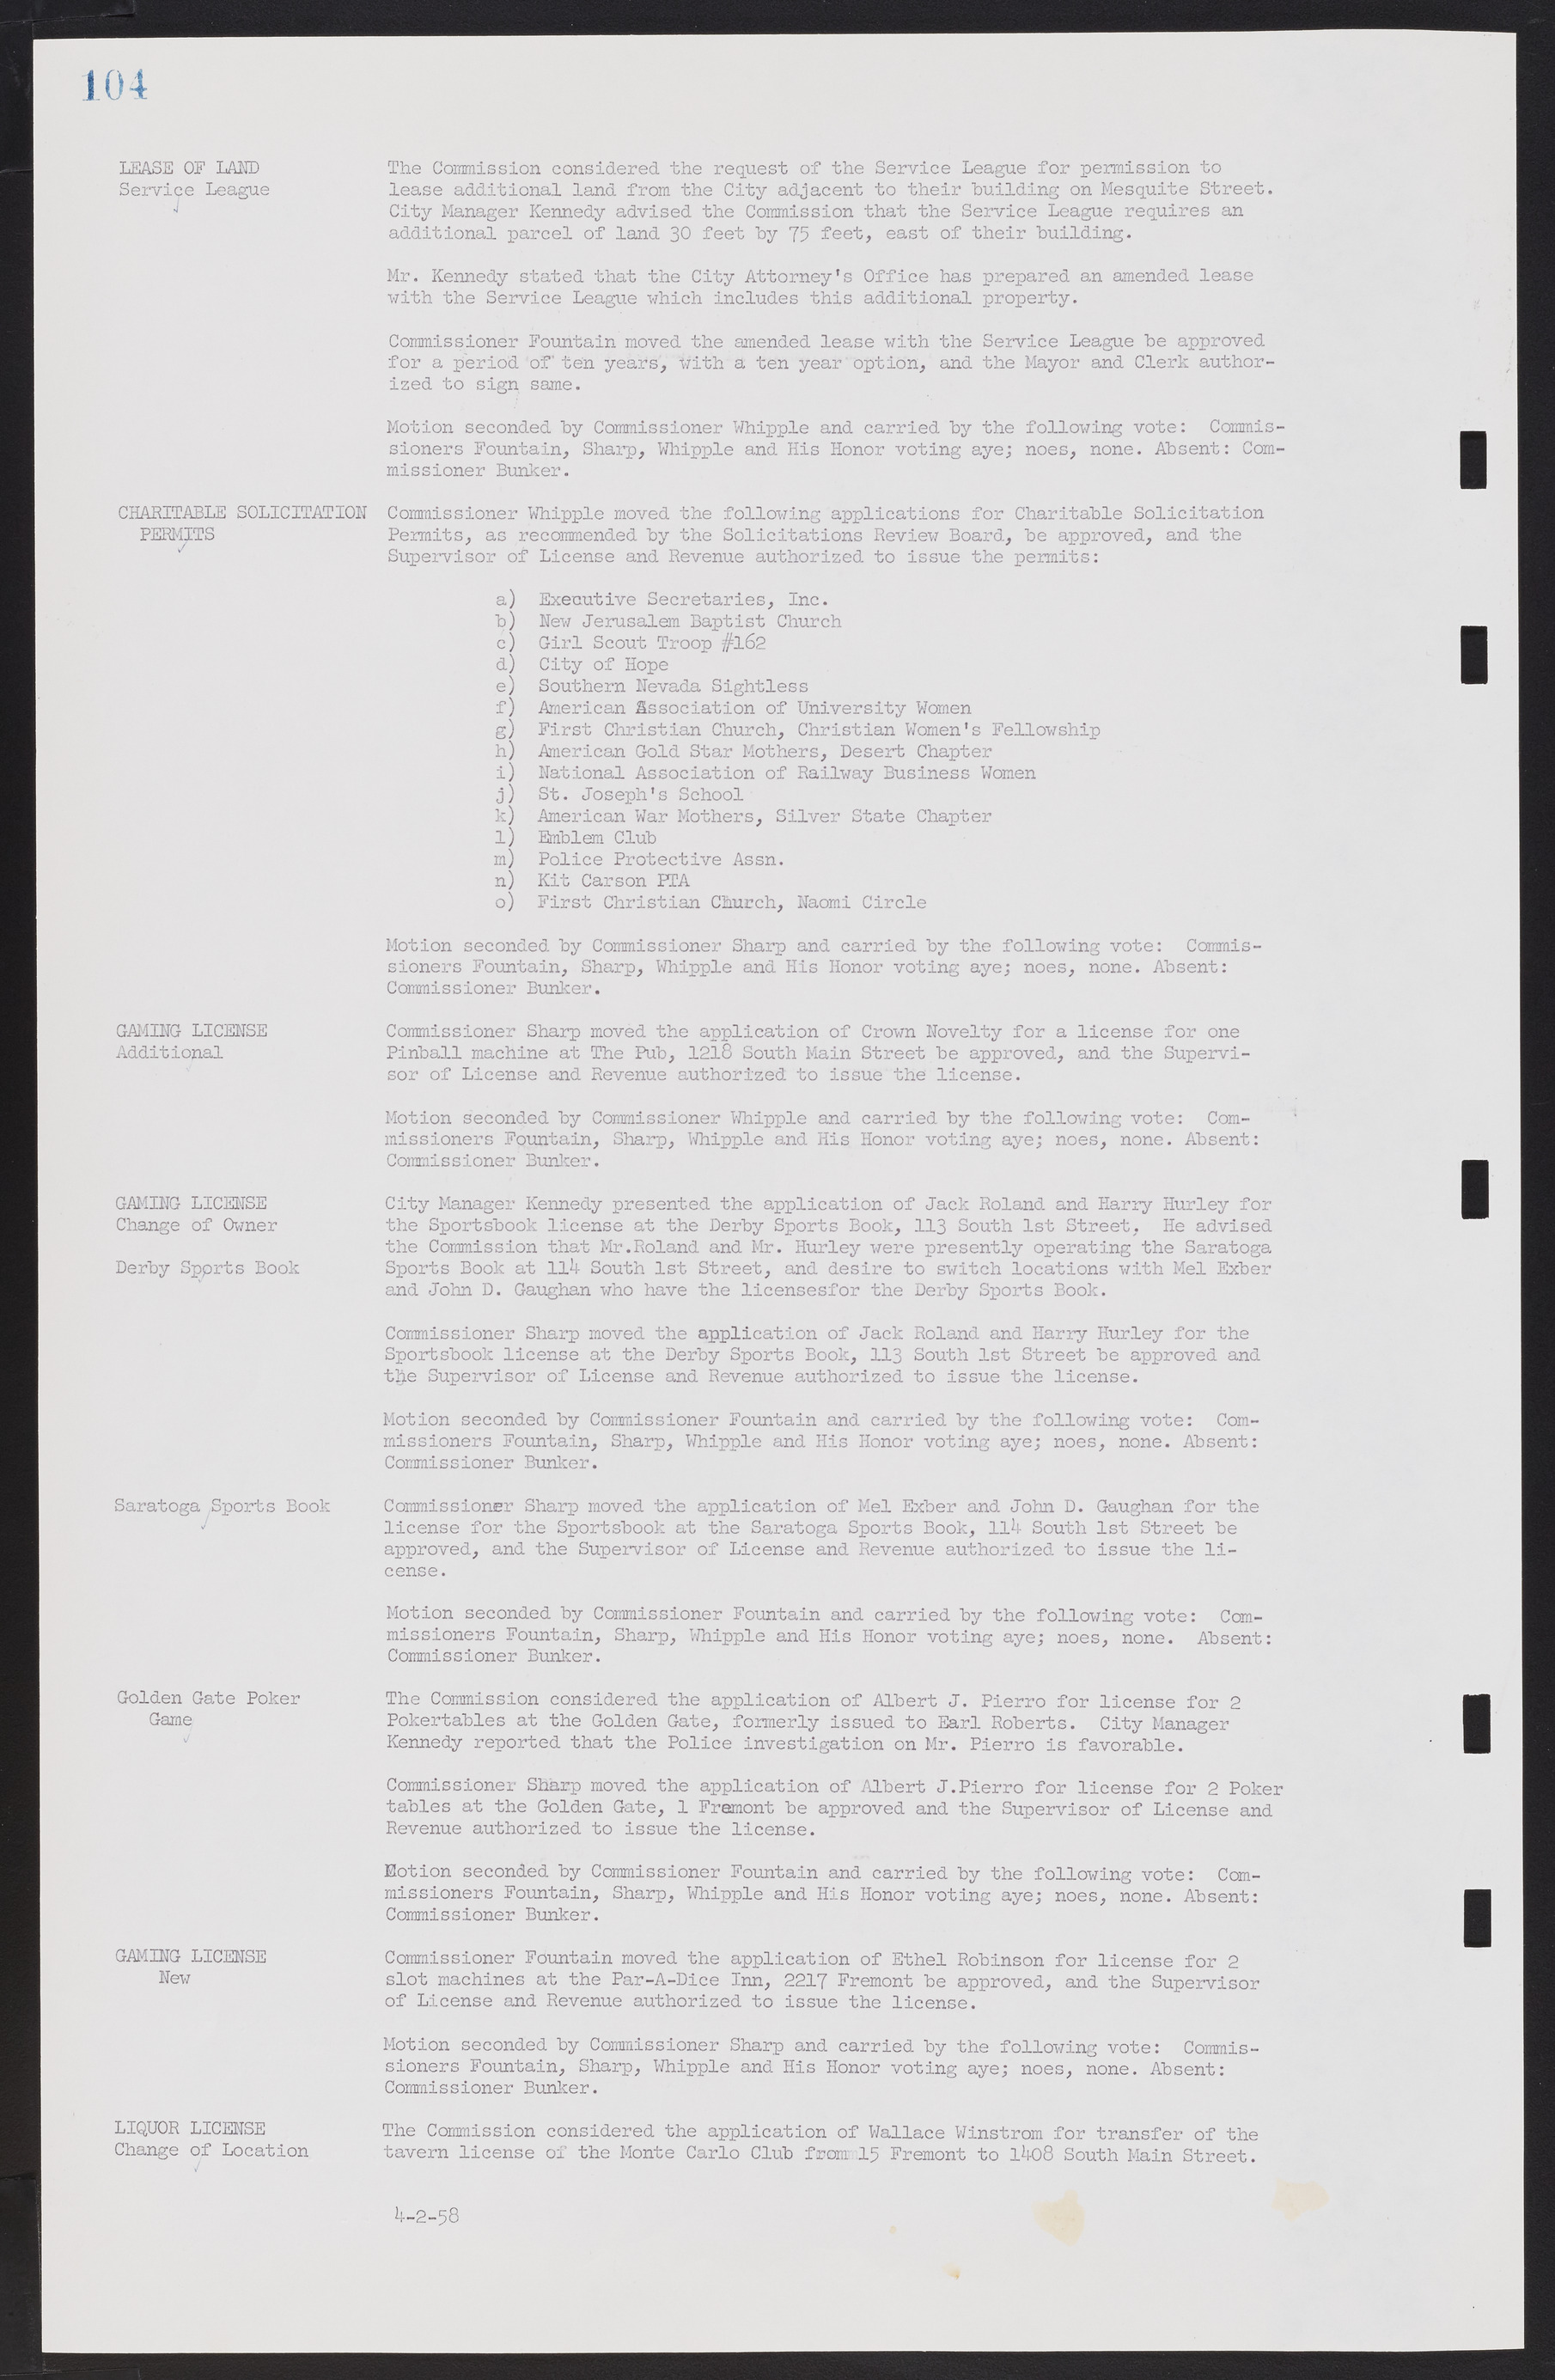 Las Vegas City Commission Minutes, November 20, 1957 to December 2, 1959, lvc000011-108